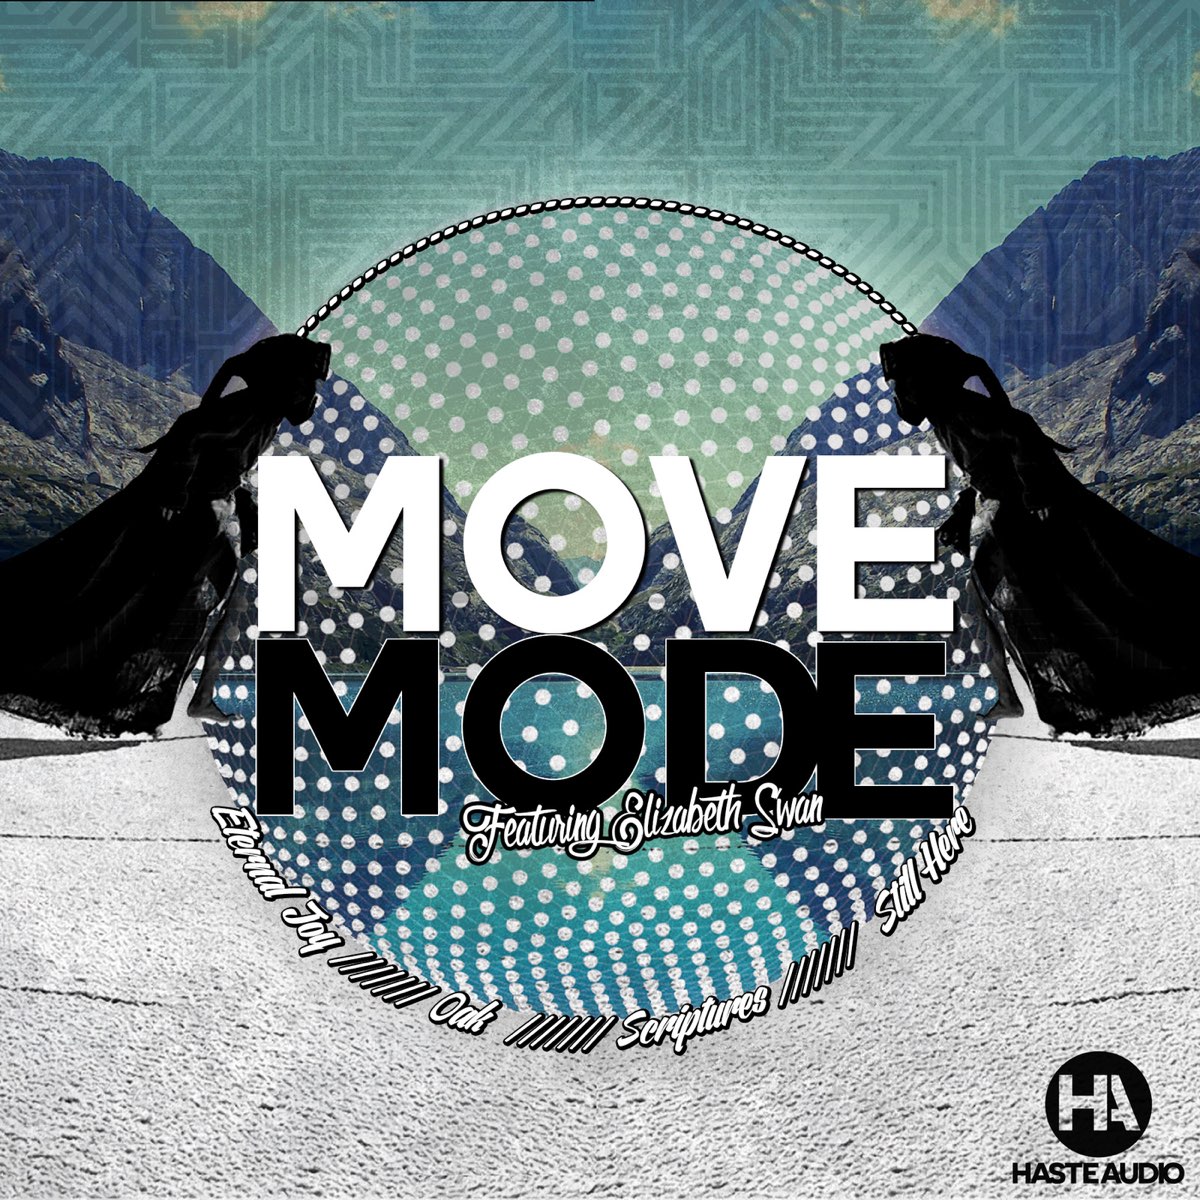 Mode move. Move Joy. Move&Joy выступление.